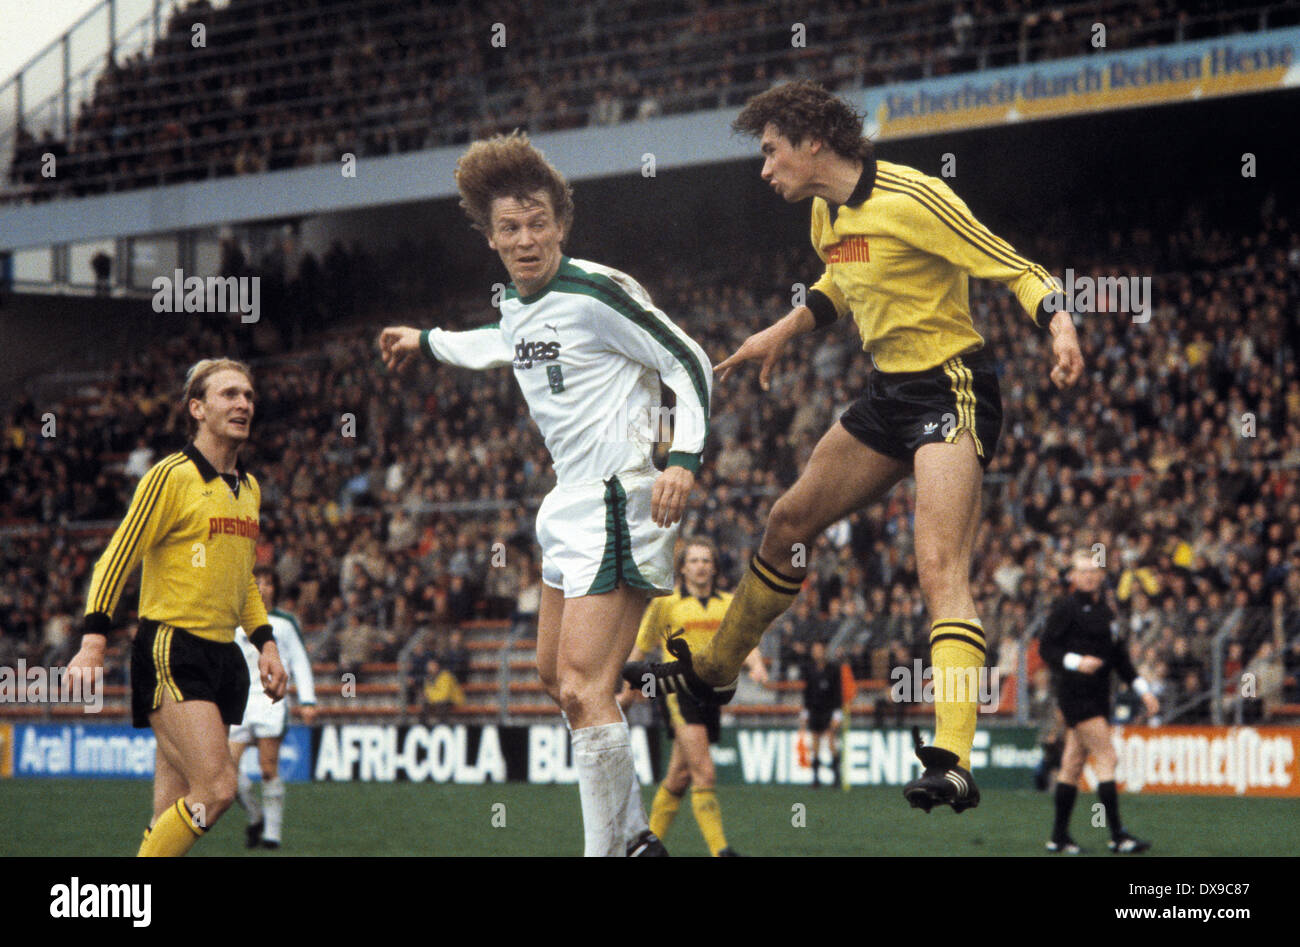 Calcio, Bundesliga, 1979/1980, Stadio am Boekelberg, Borussia Moenchengladbach contro il Borussia Dortmund 2:2, scena del match, antenna duello, f.l.t.r. Hans-Joachim Wagner (BVB), Harald nichel (MG), Meinolf Koch (BVB) Foto Stock